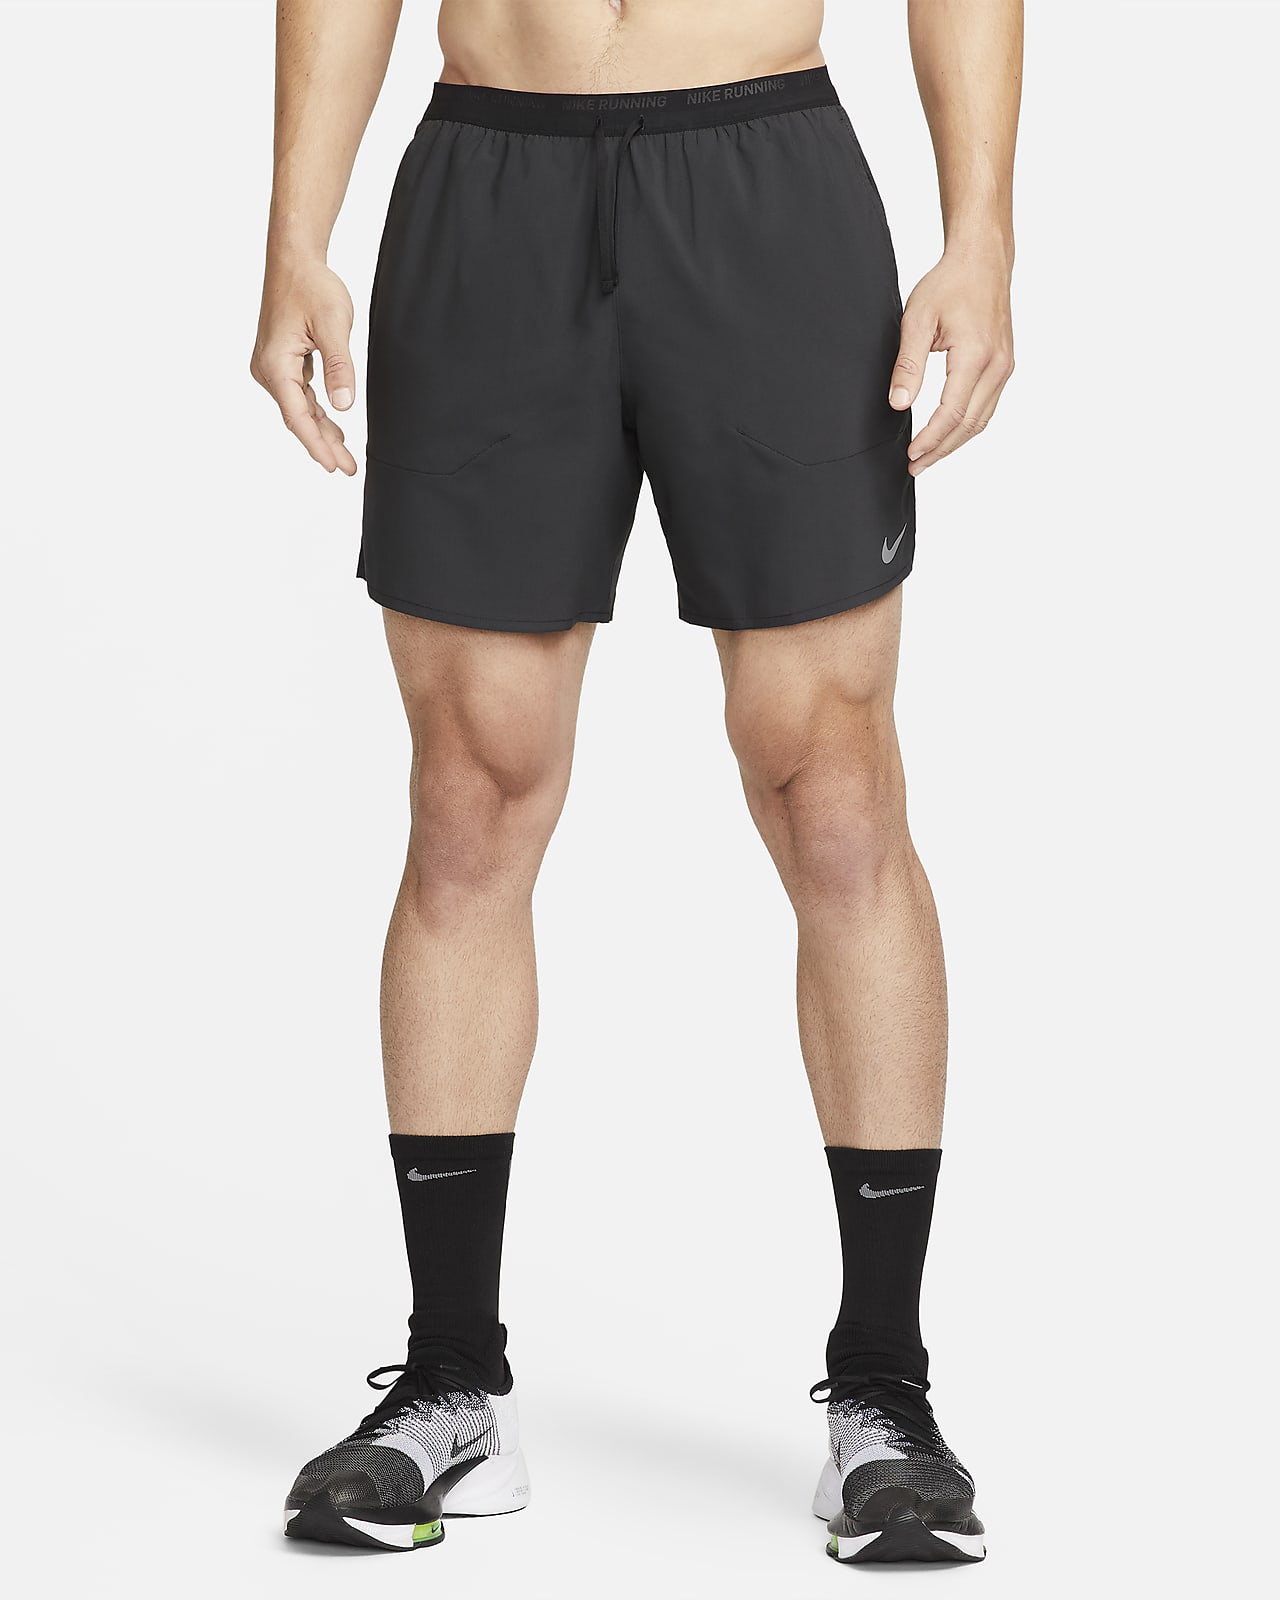 Brief-Lined Running Shorts. Nike NL